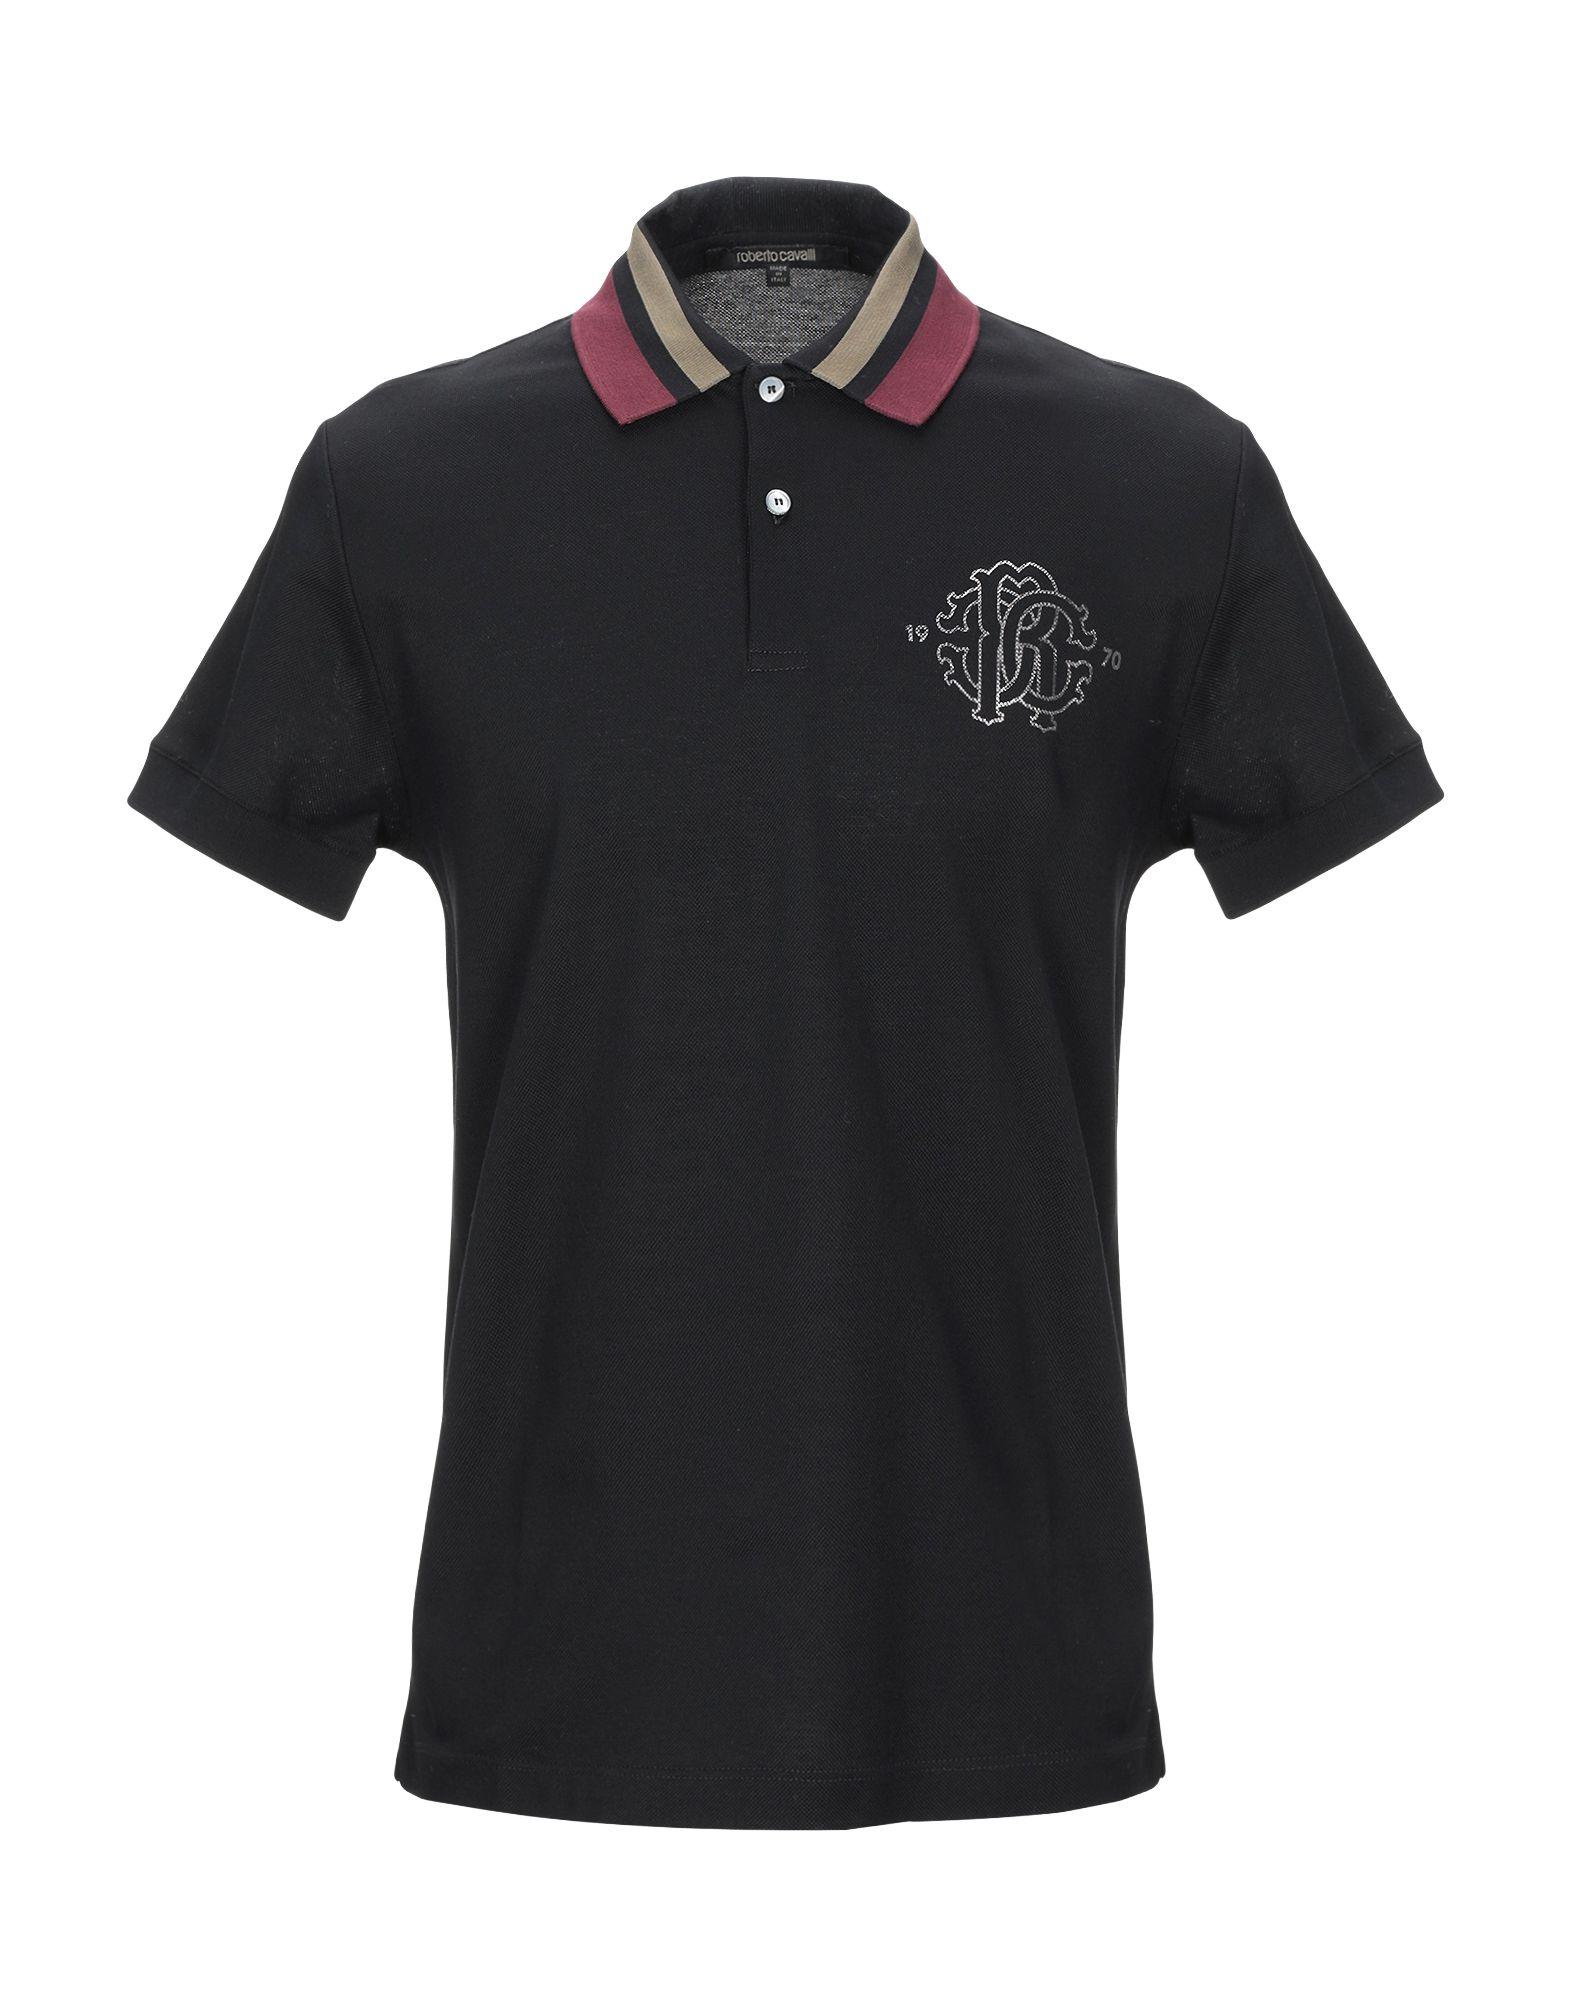 Roberto Cavalli Cotton Polo Shirt in Black for Men - Lyst